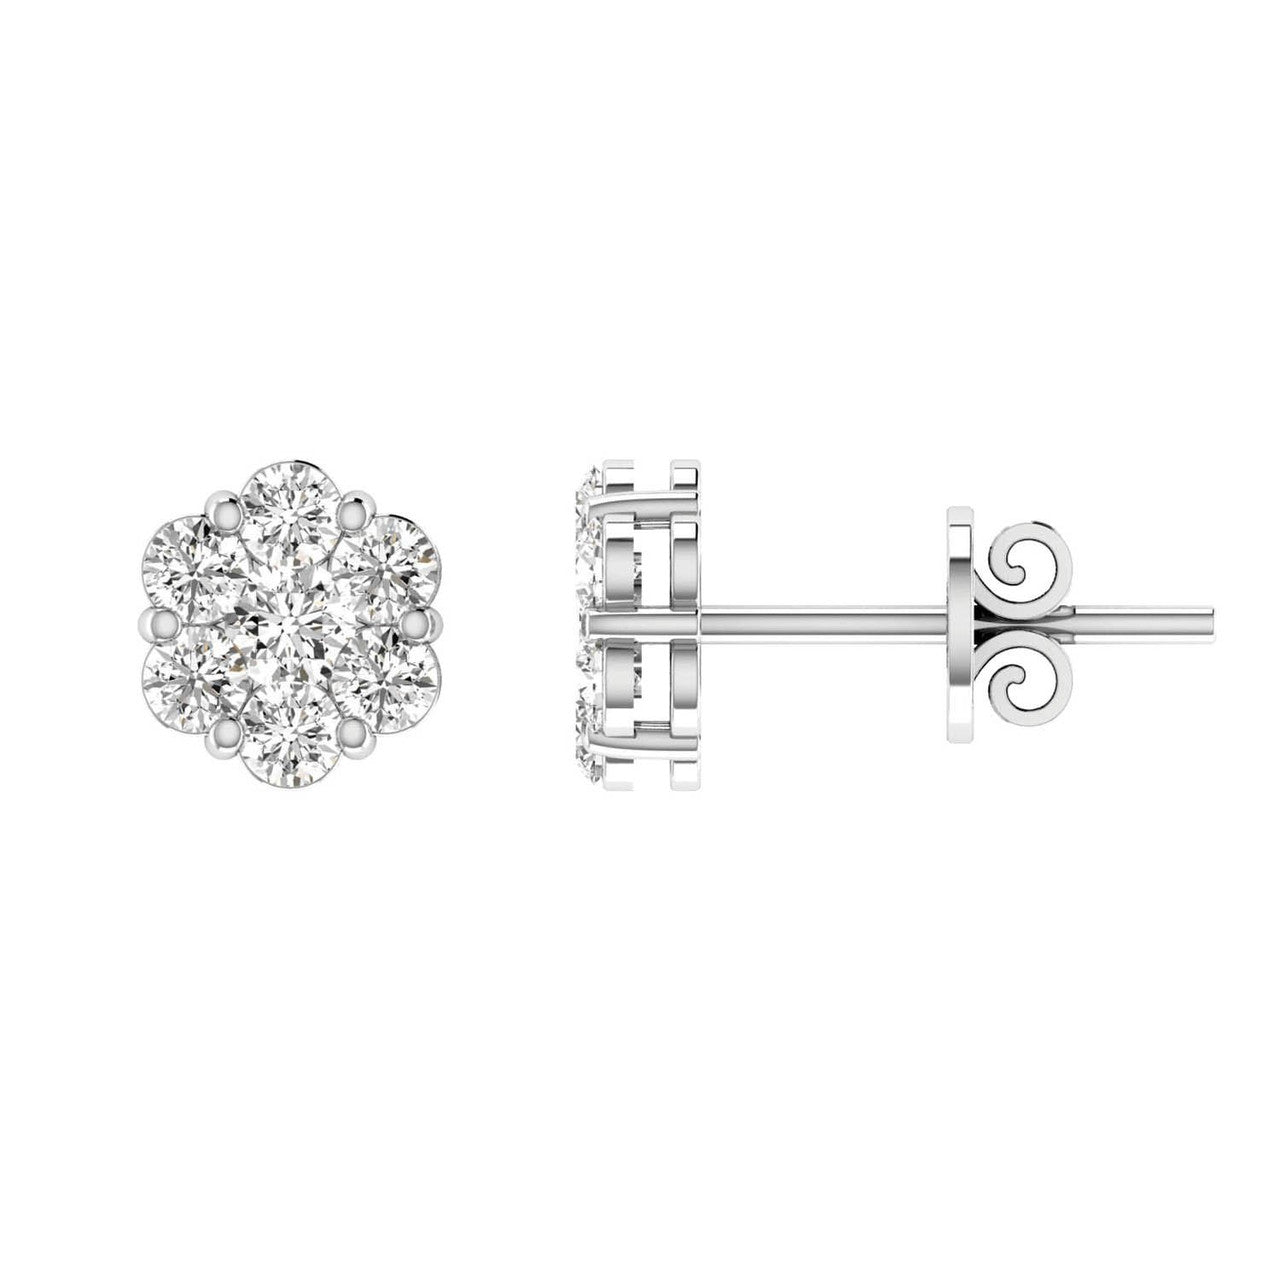 Ice Jewellery Cluster Stud Diamond Earrings with 0.75ct Diamonds in 9K White Gold - RJ9WECLUS75GH | Ice Jewellery Australia